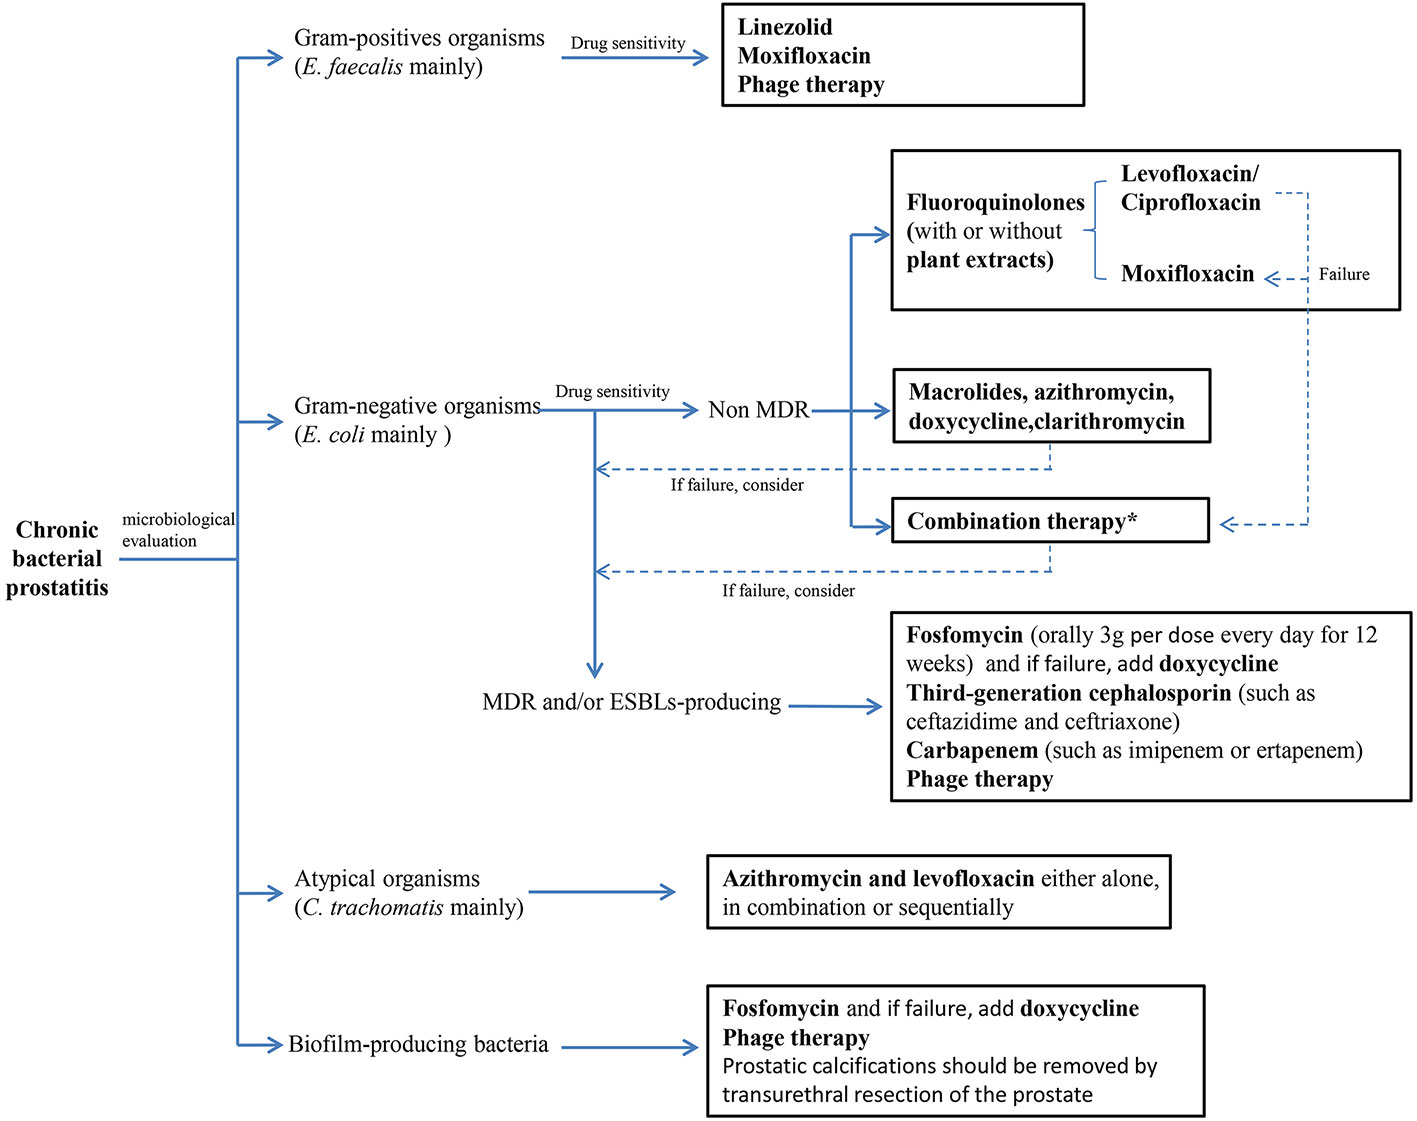 levofloxacin in chronic bacterial prostatitis patients)